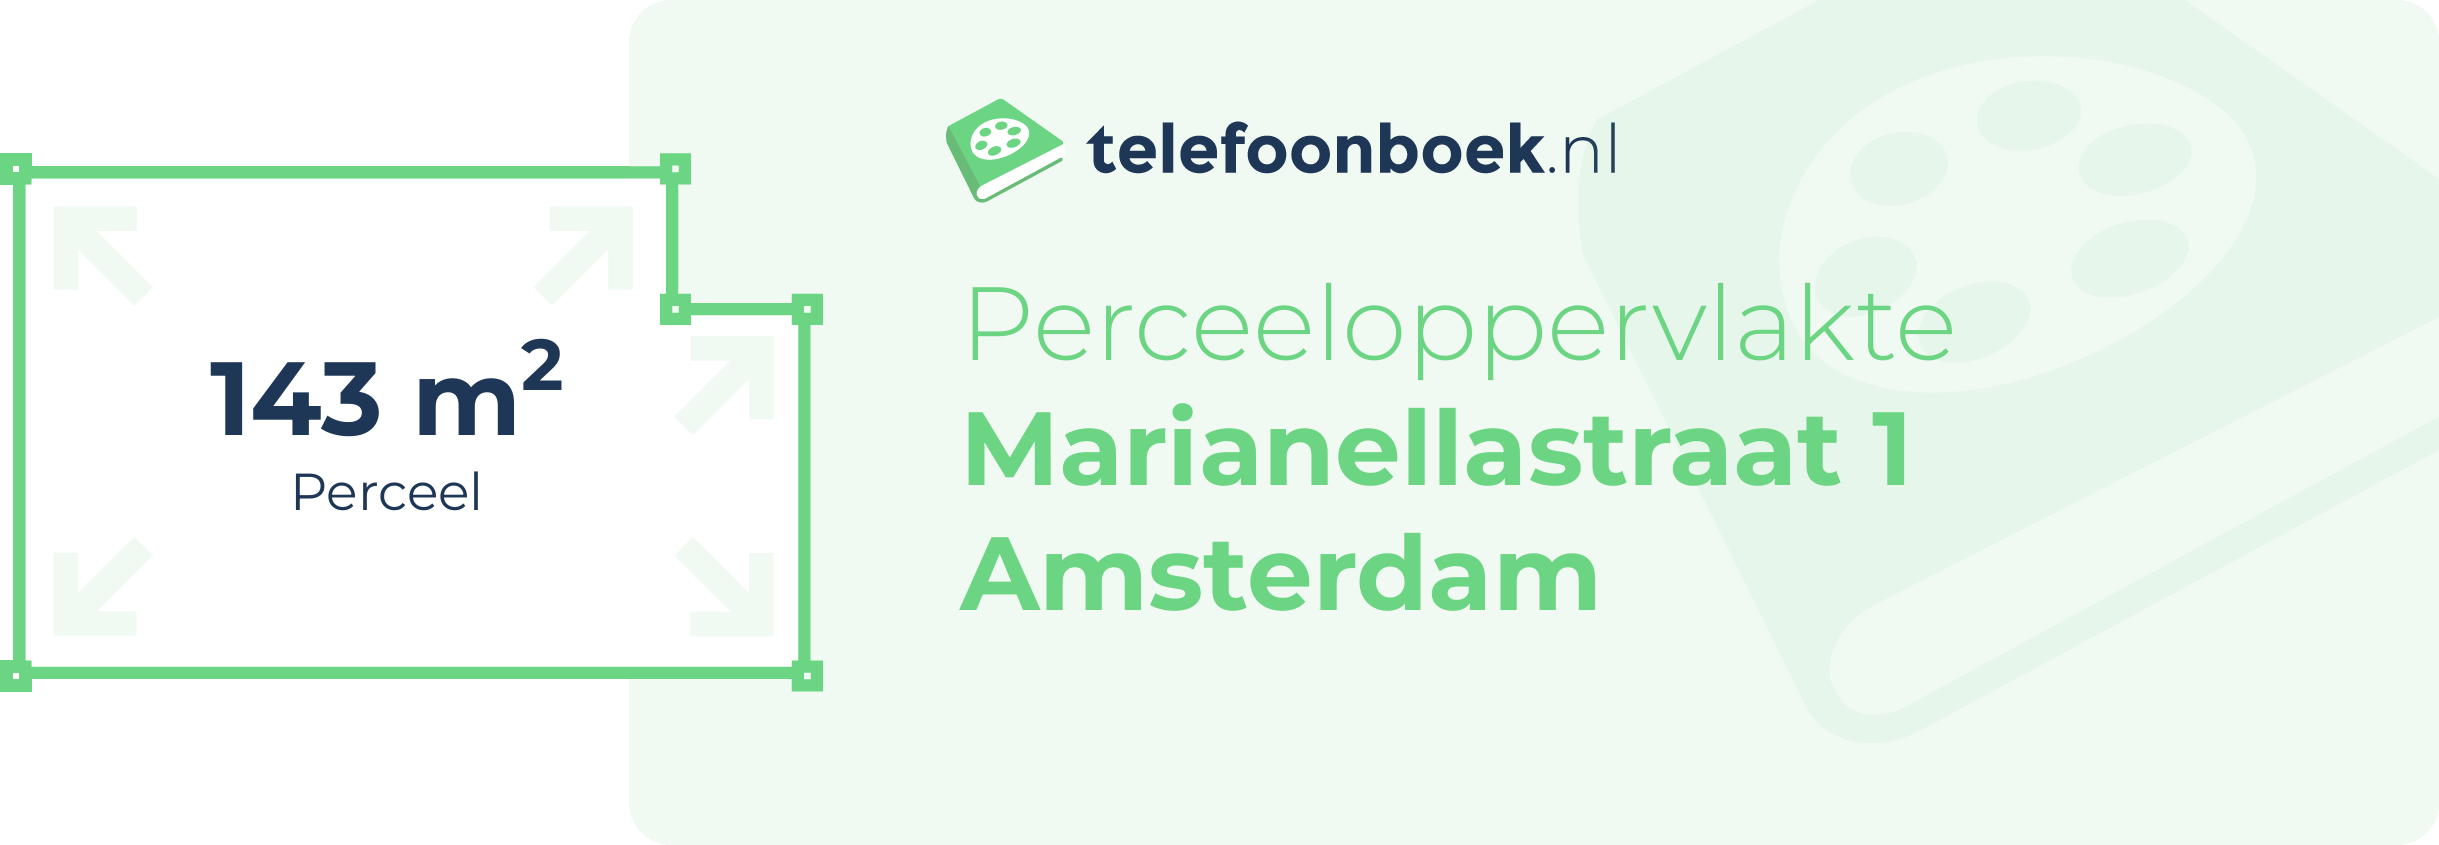 Perceeloppervlakte Marianellastraat 1 Amsterdam